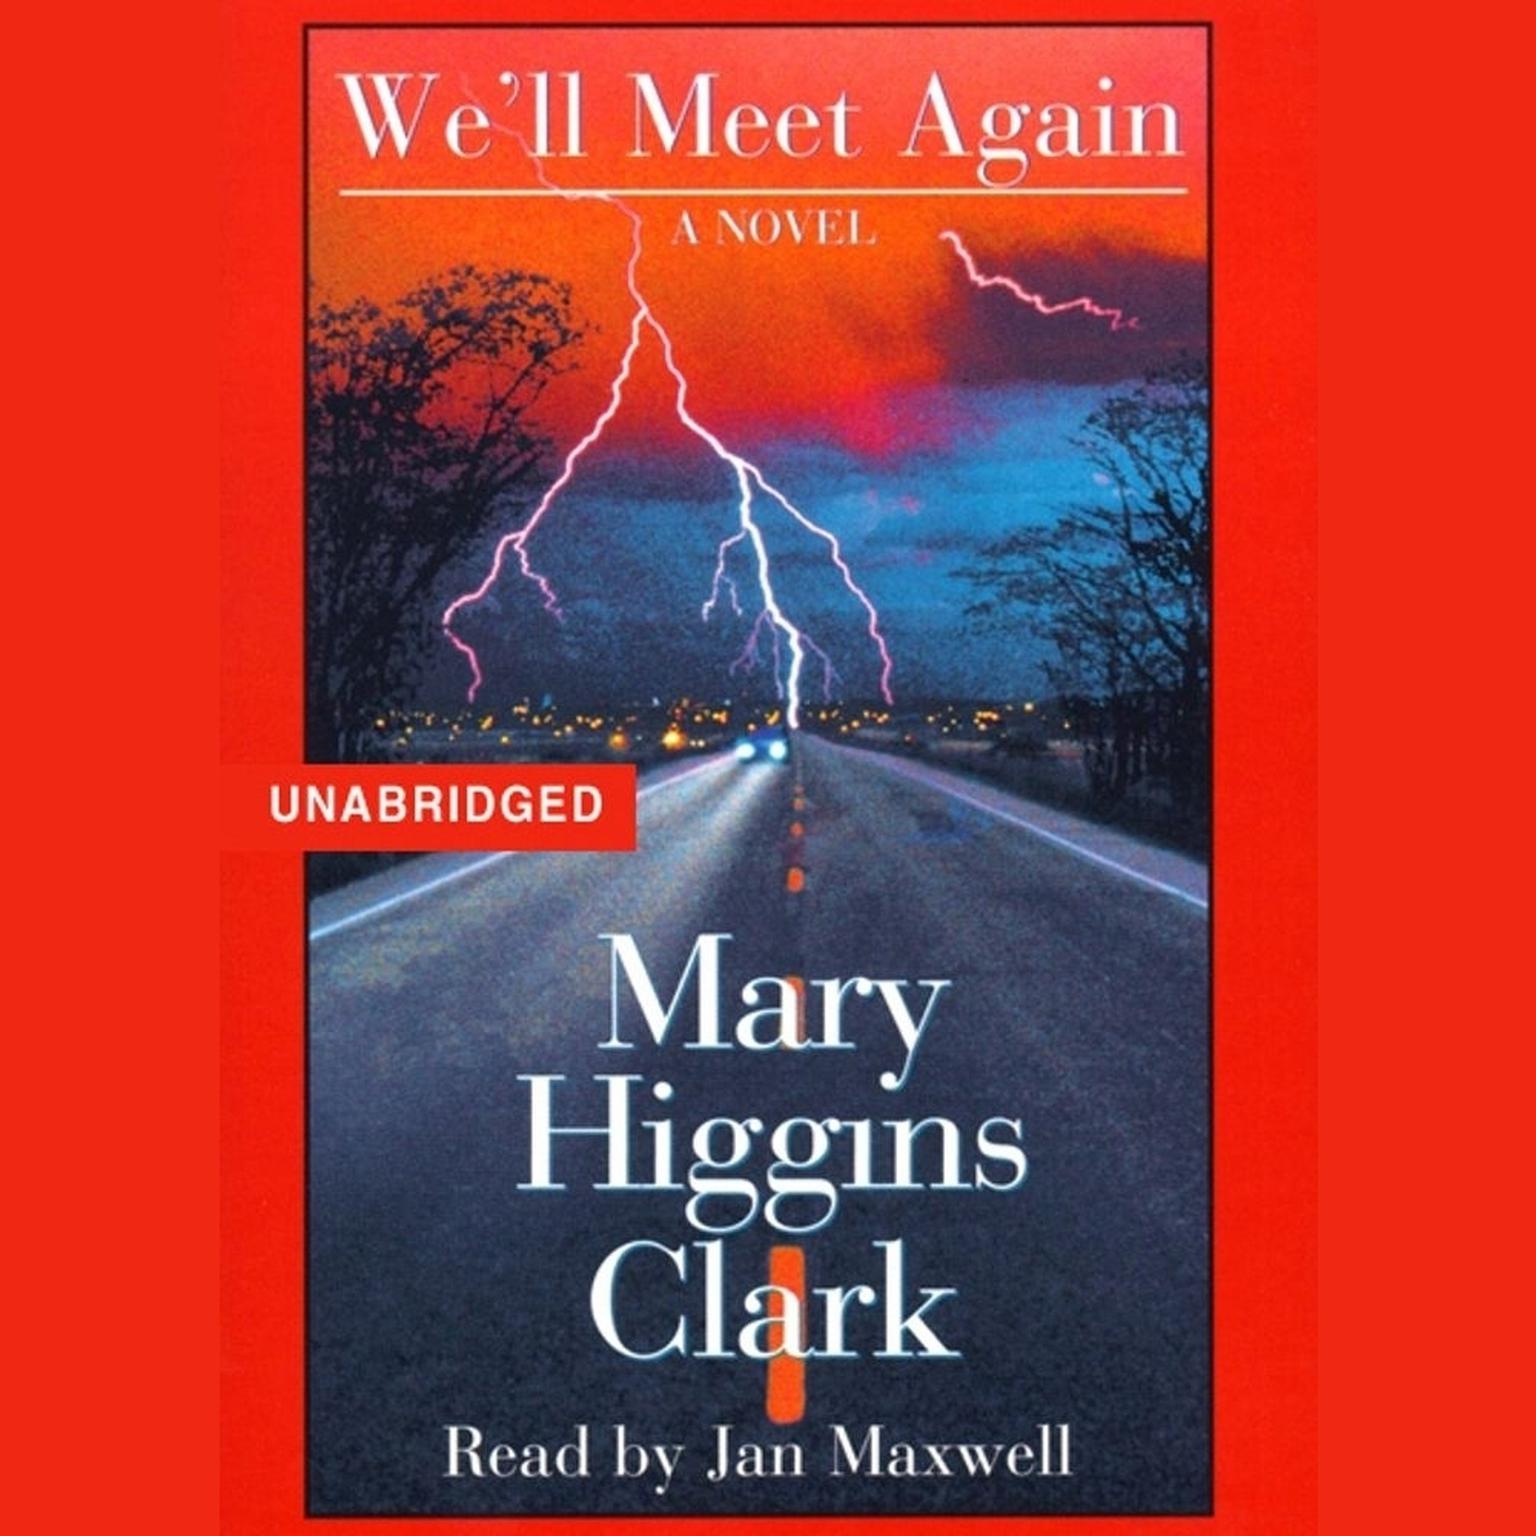 Well Meet Again Audiobook, by Mary Higgins Clark